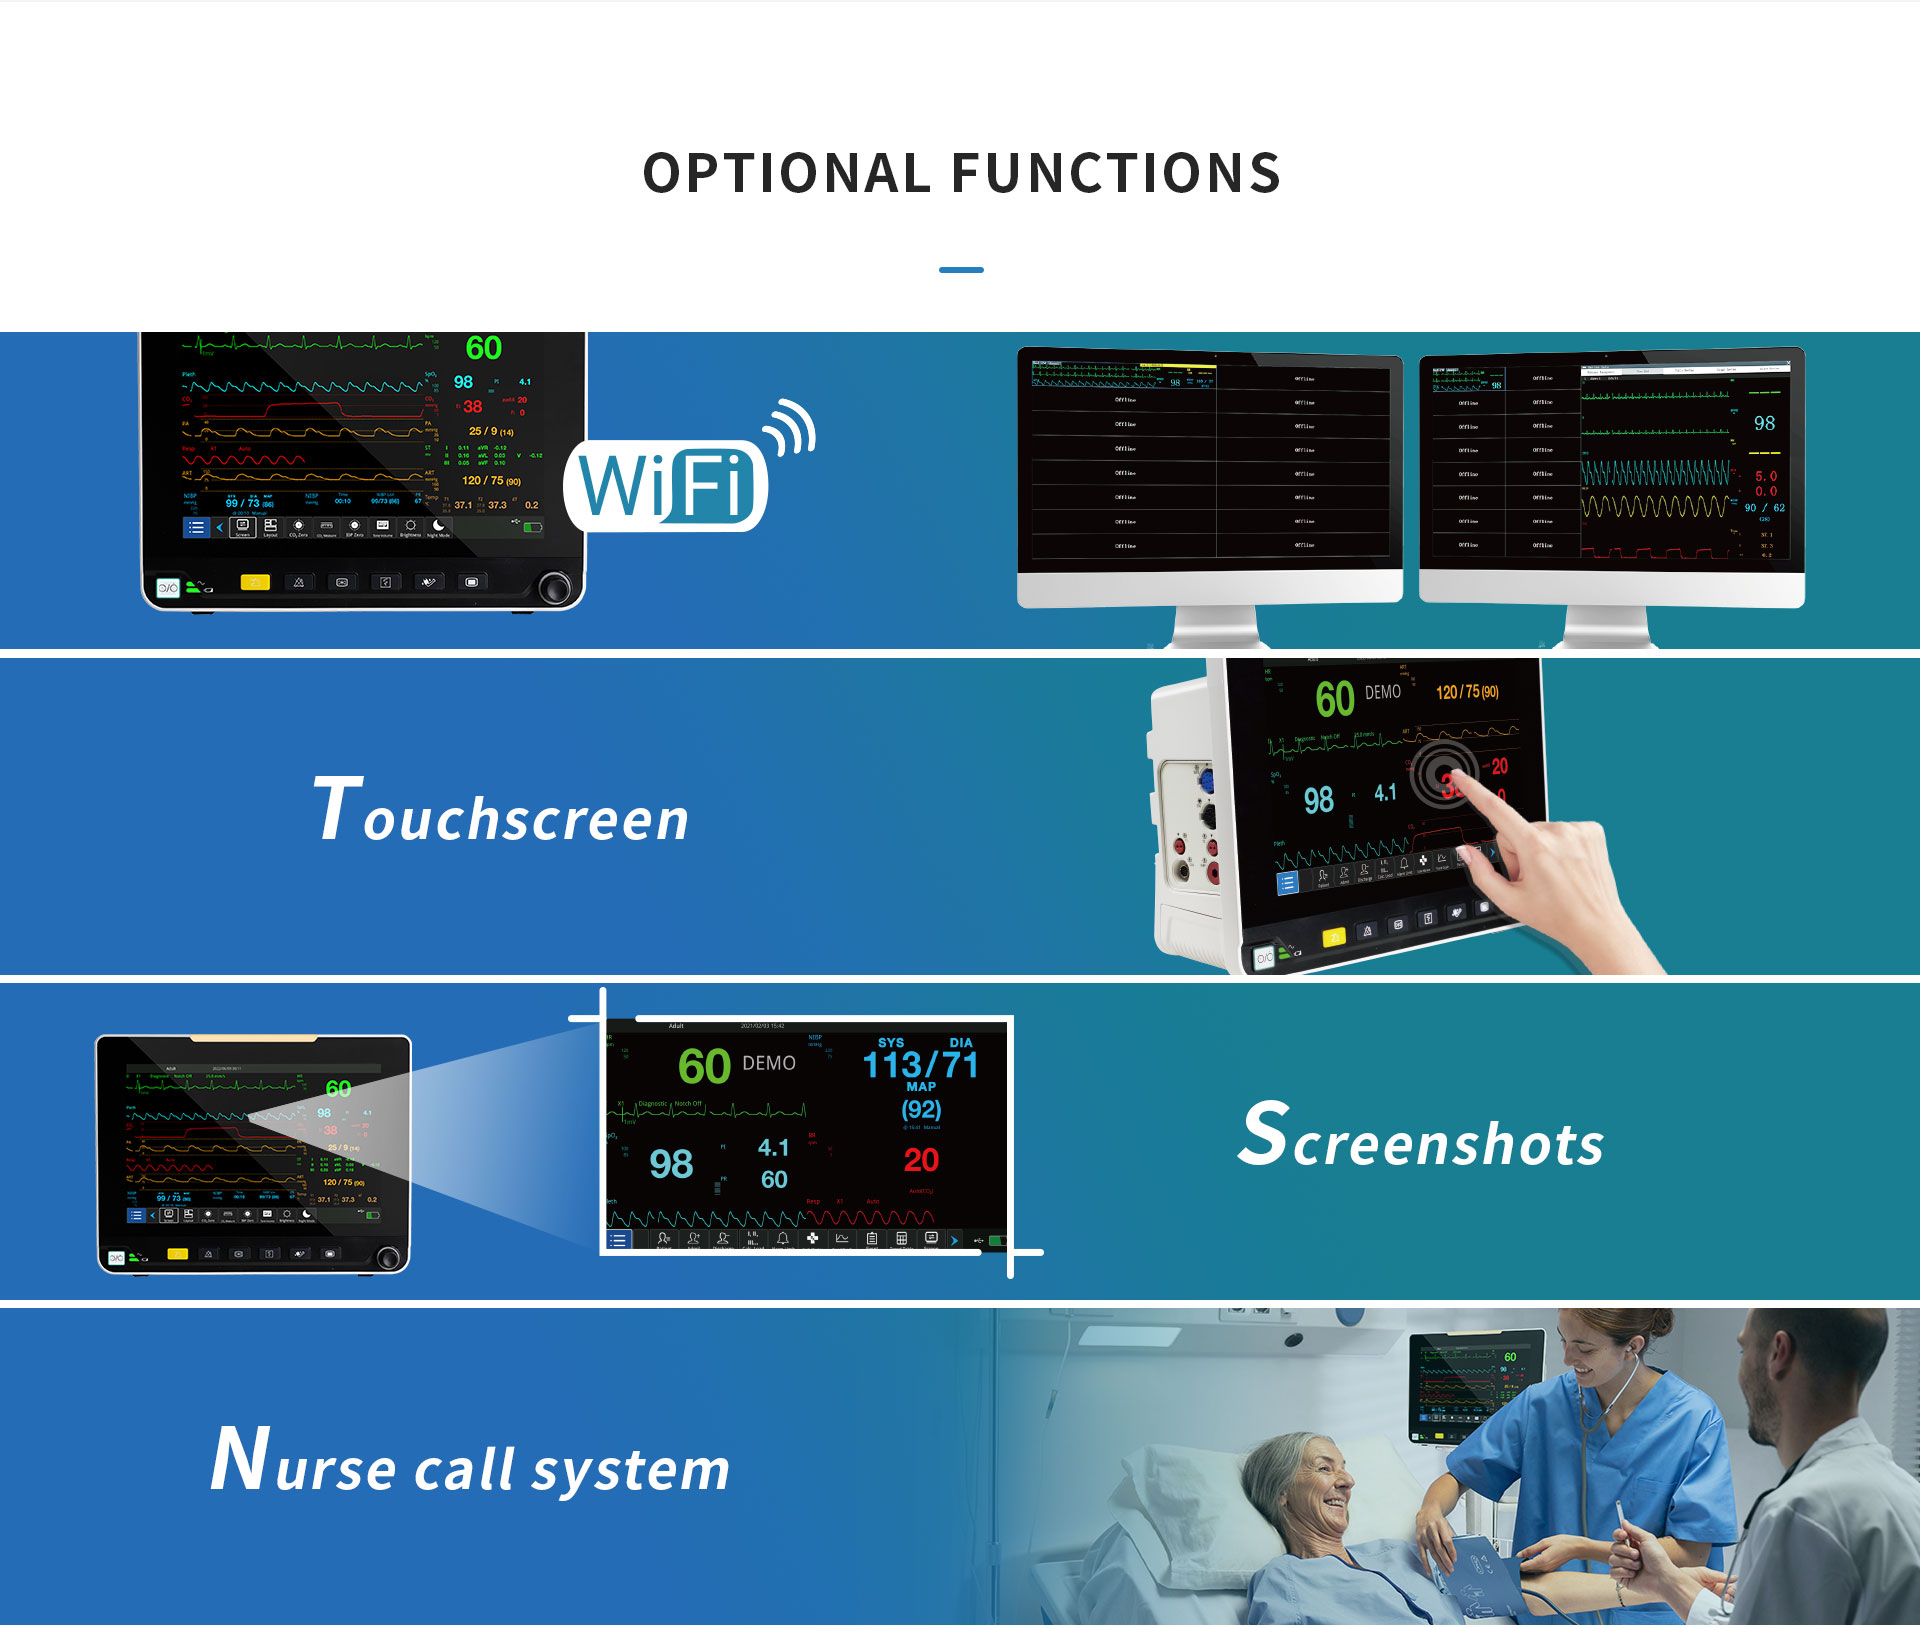 https://www.ultrasounddawei.com/dawei-multi-parameter-patient-monitor-hd11-product